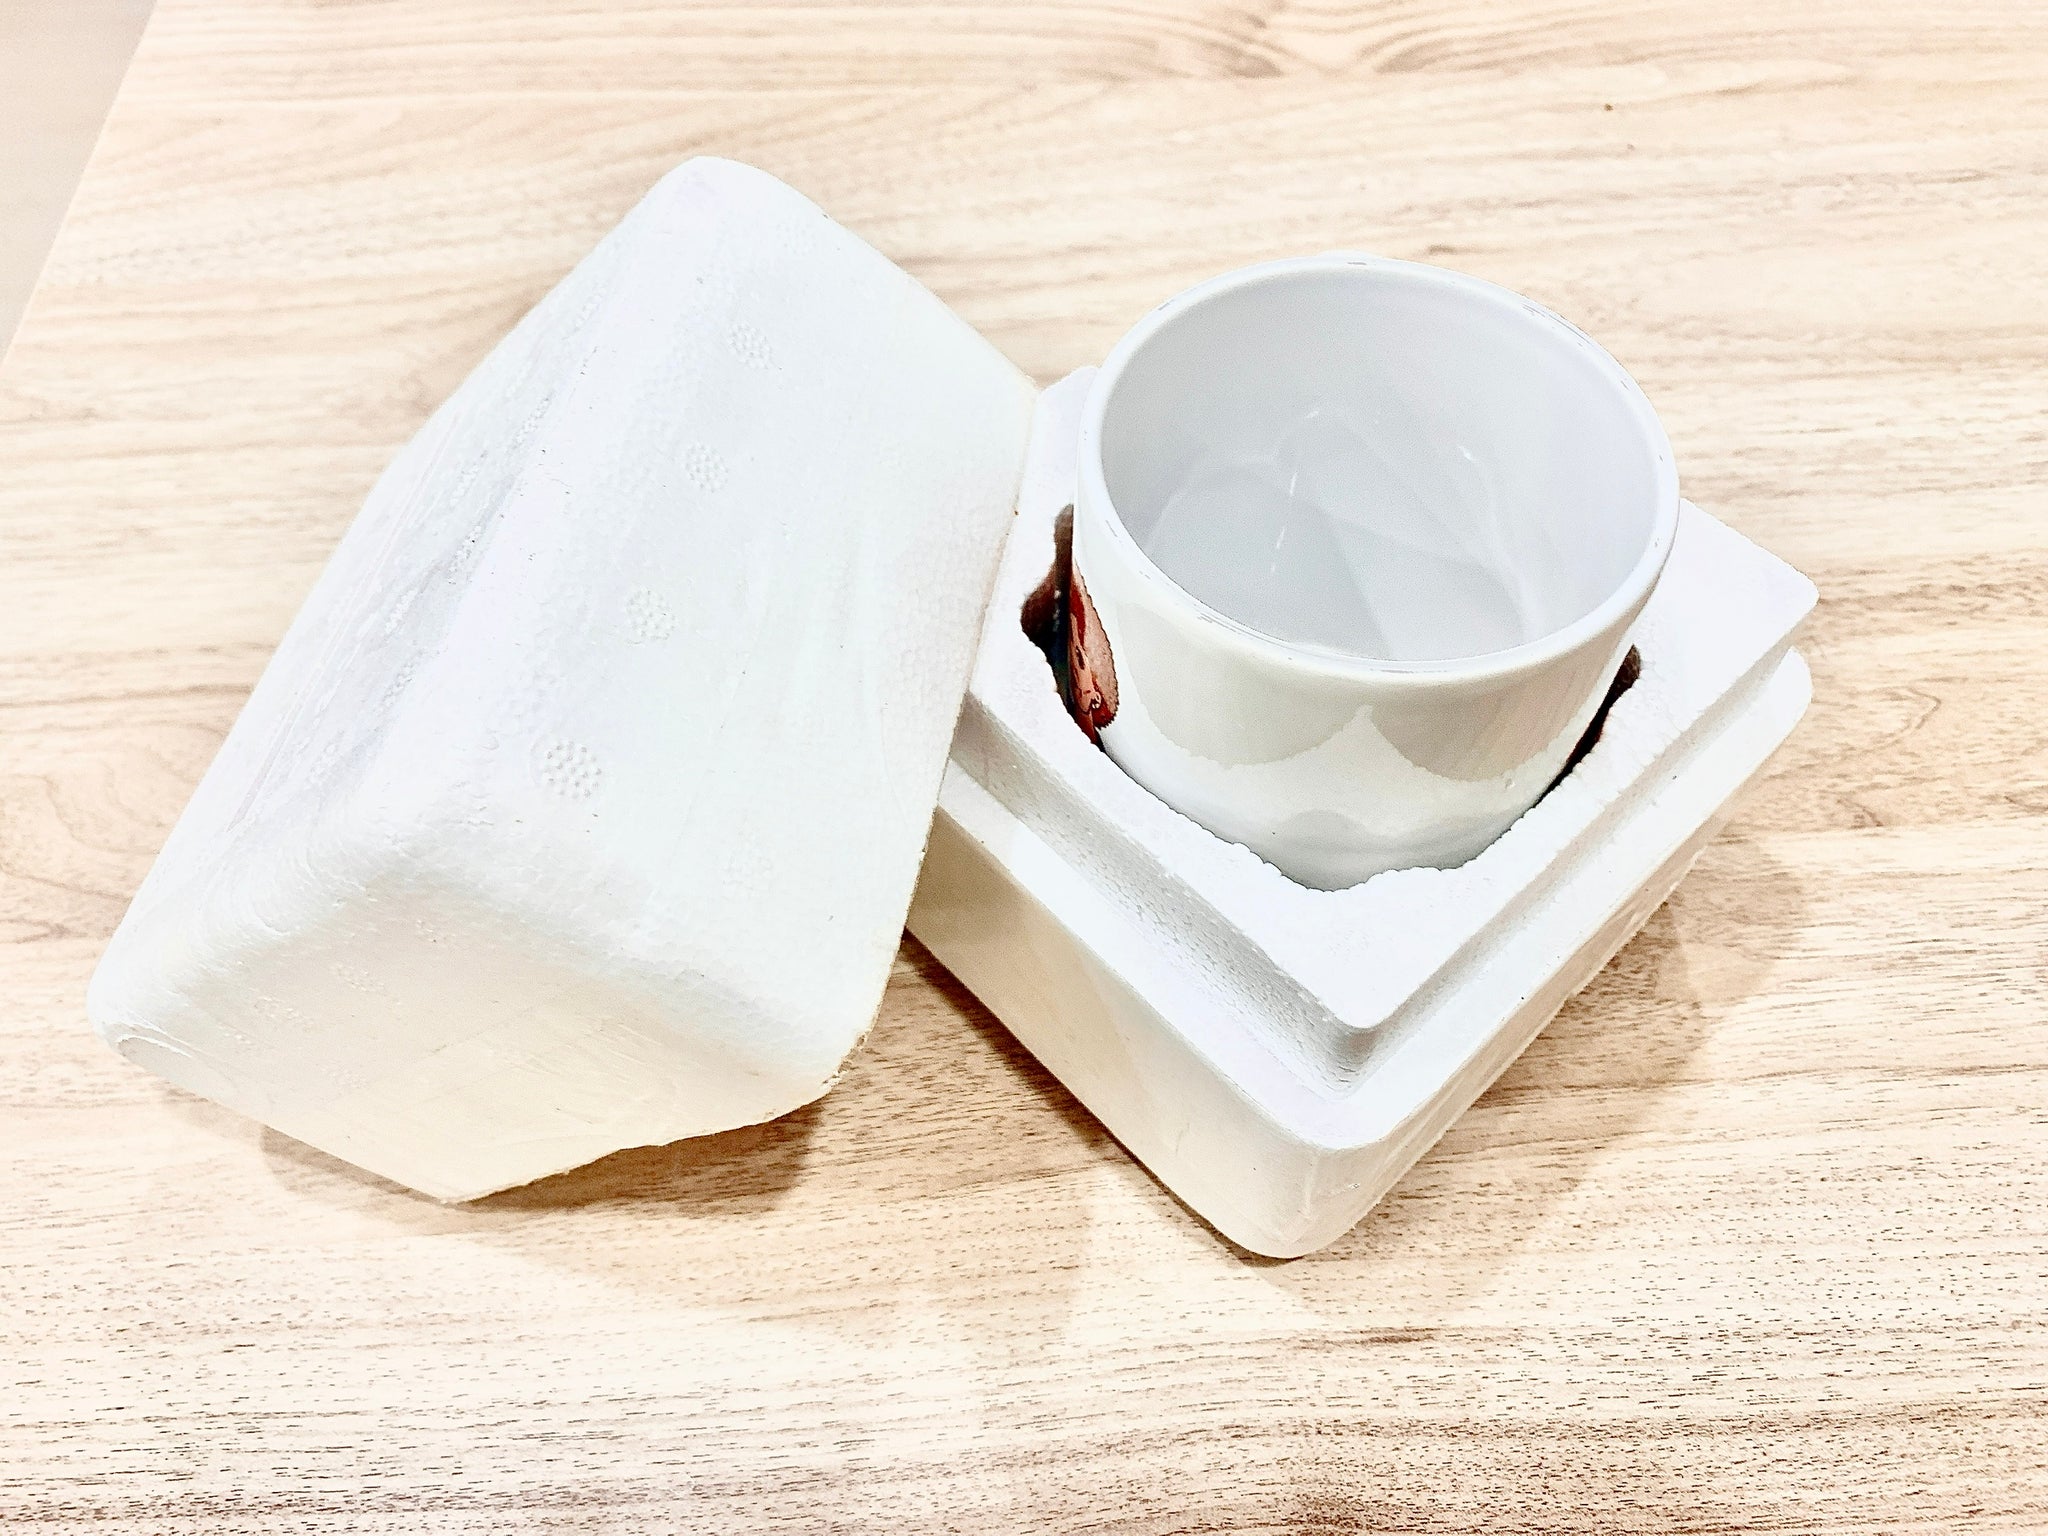 Skitongifts Funny Ceramic Coffee Mug Novelty M31-Nh201221-World's Most Awesome Grandma Lgq4Qac